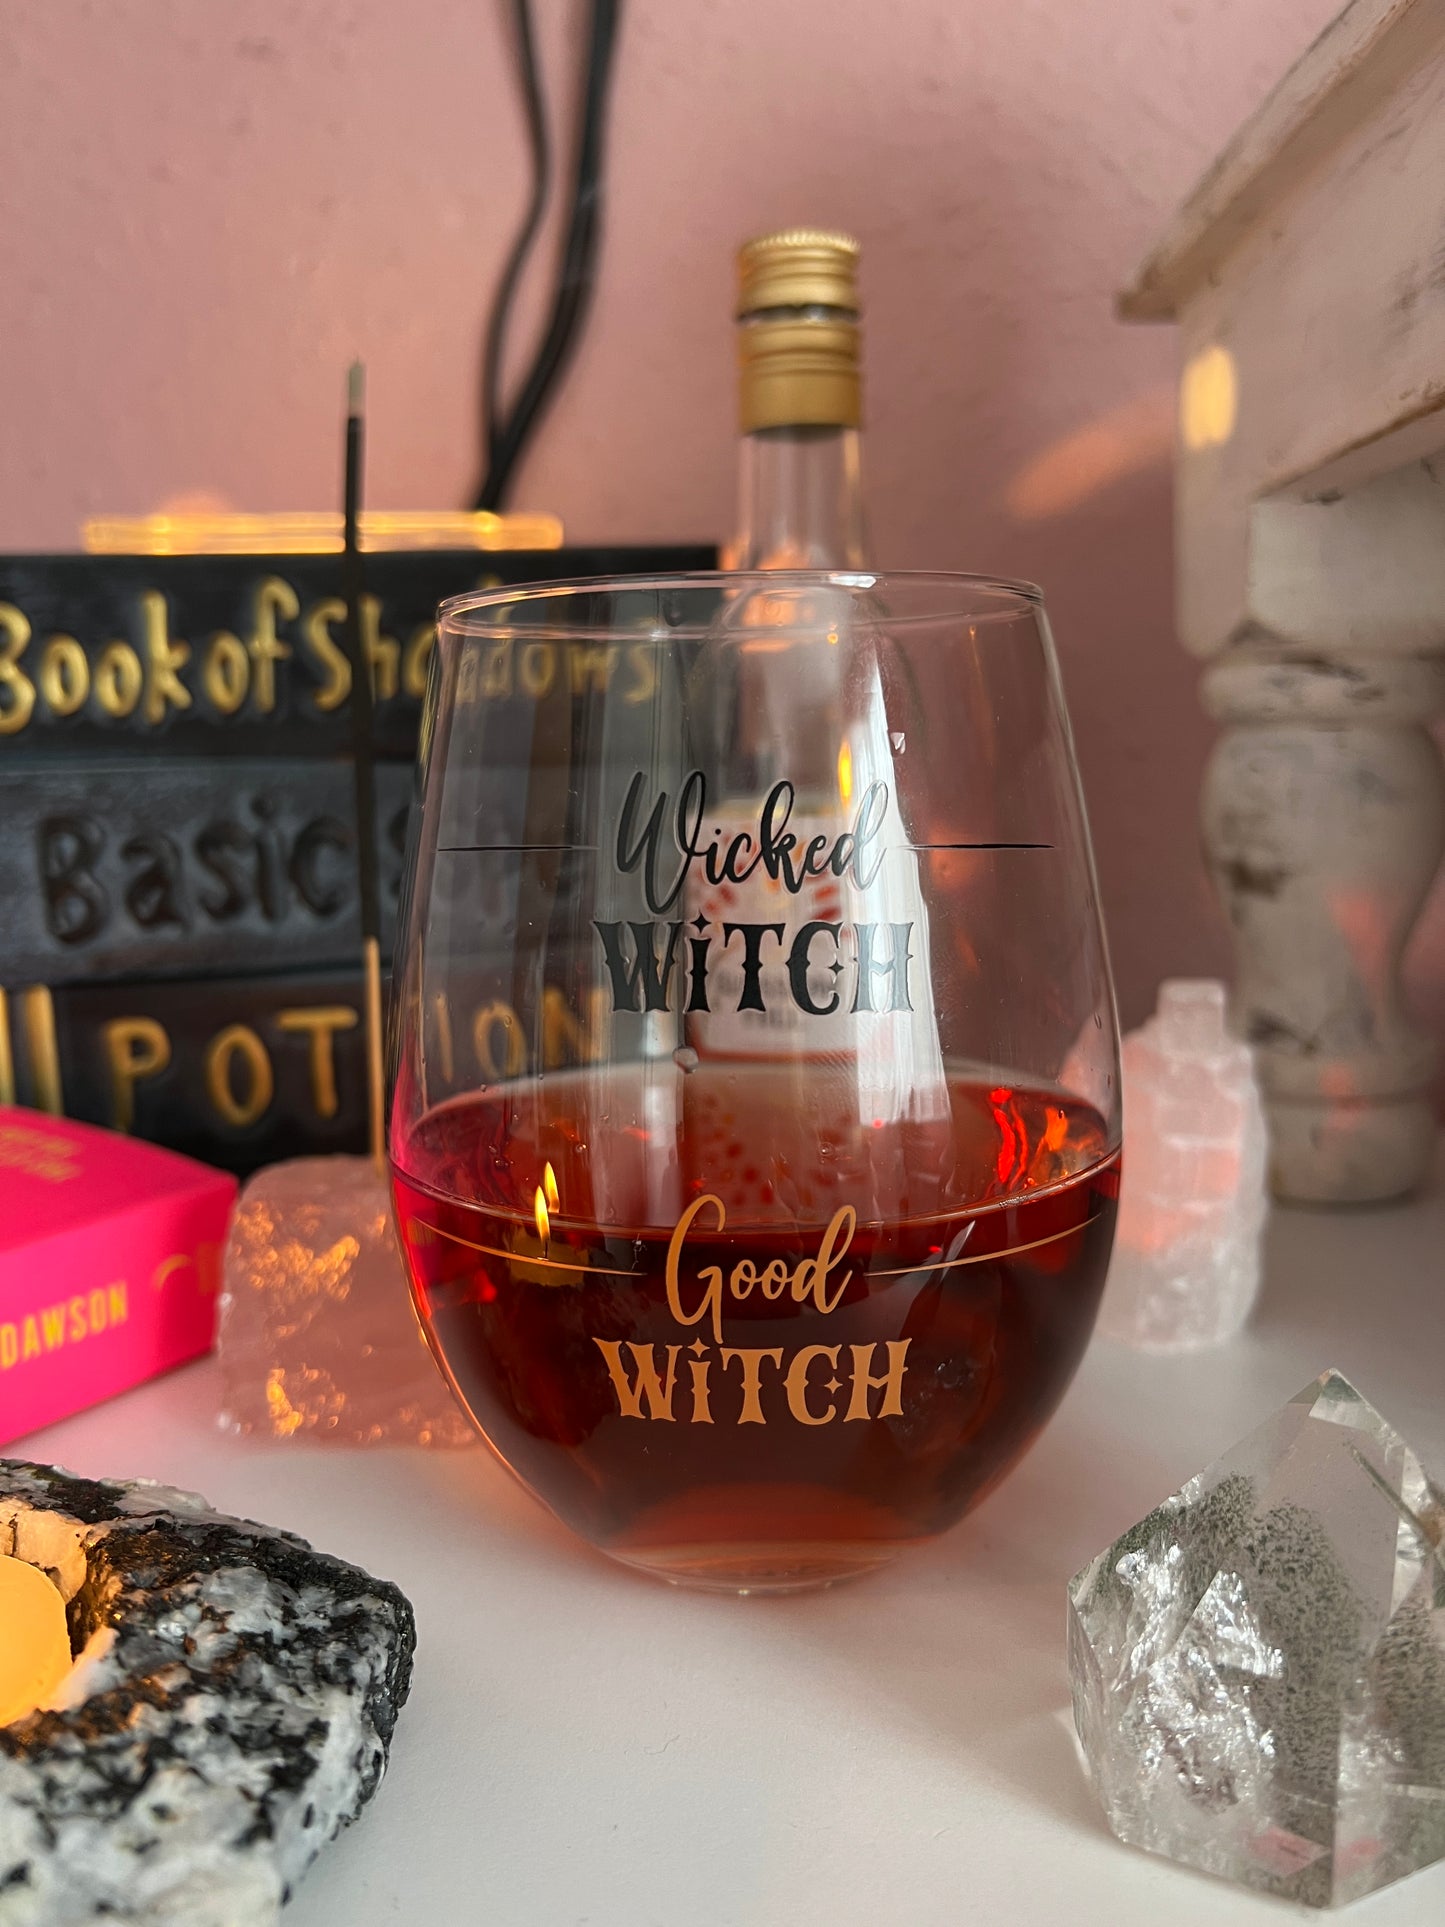 Good Witch/ Wicked witch